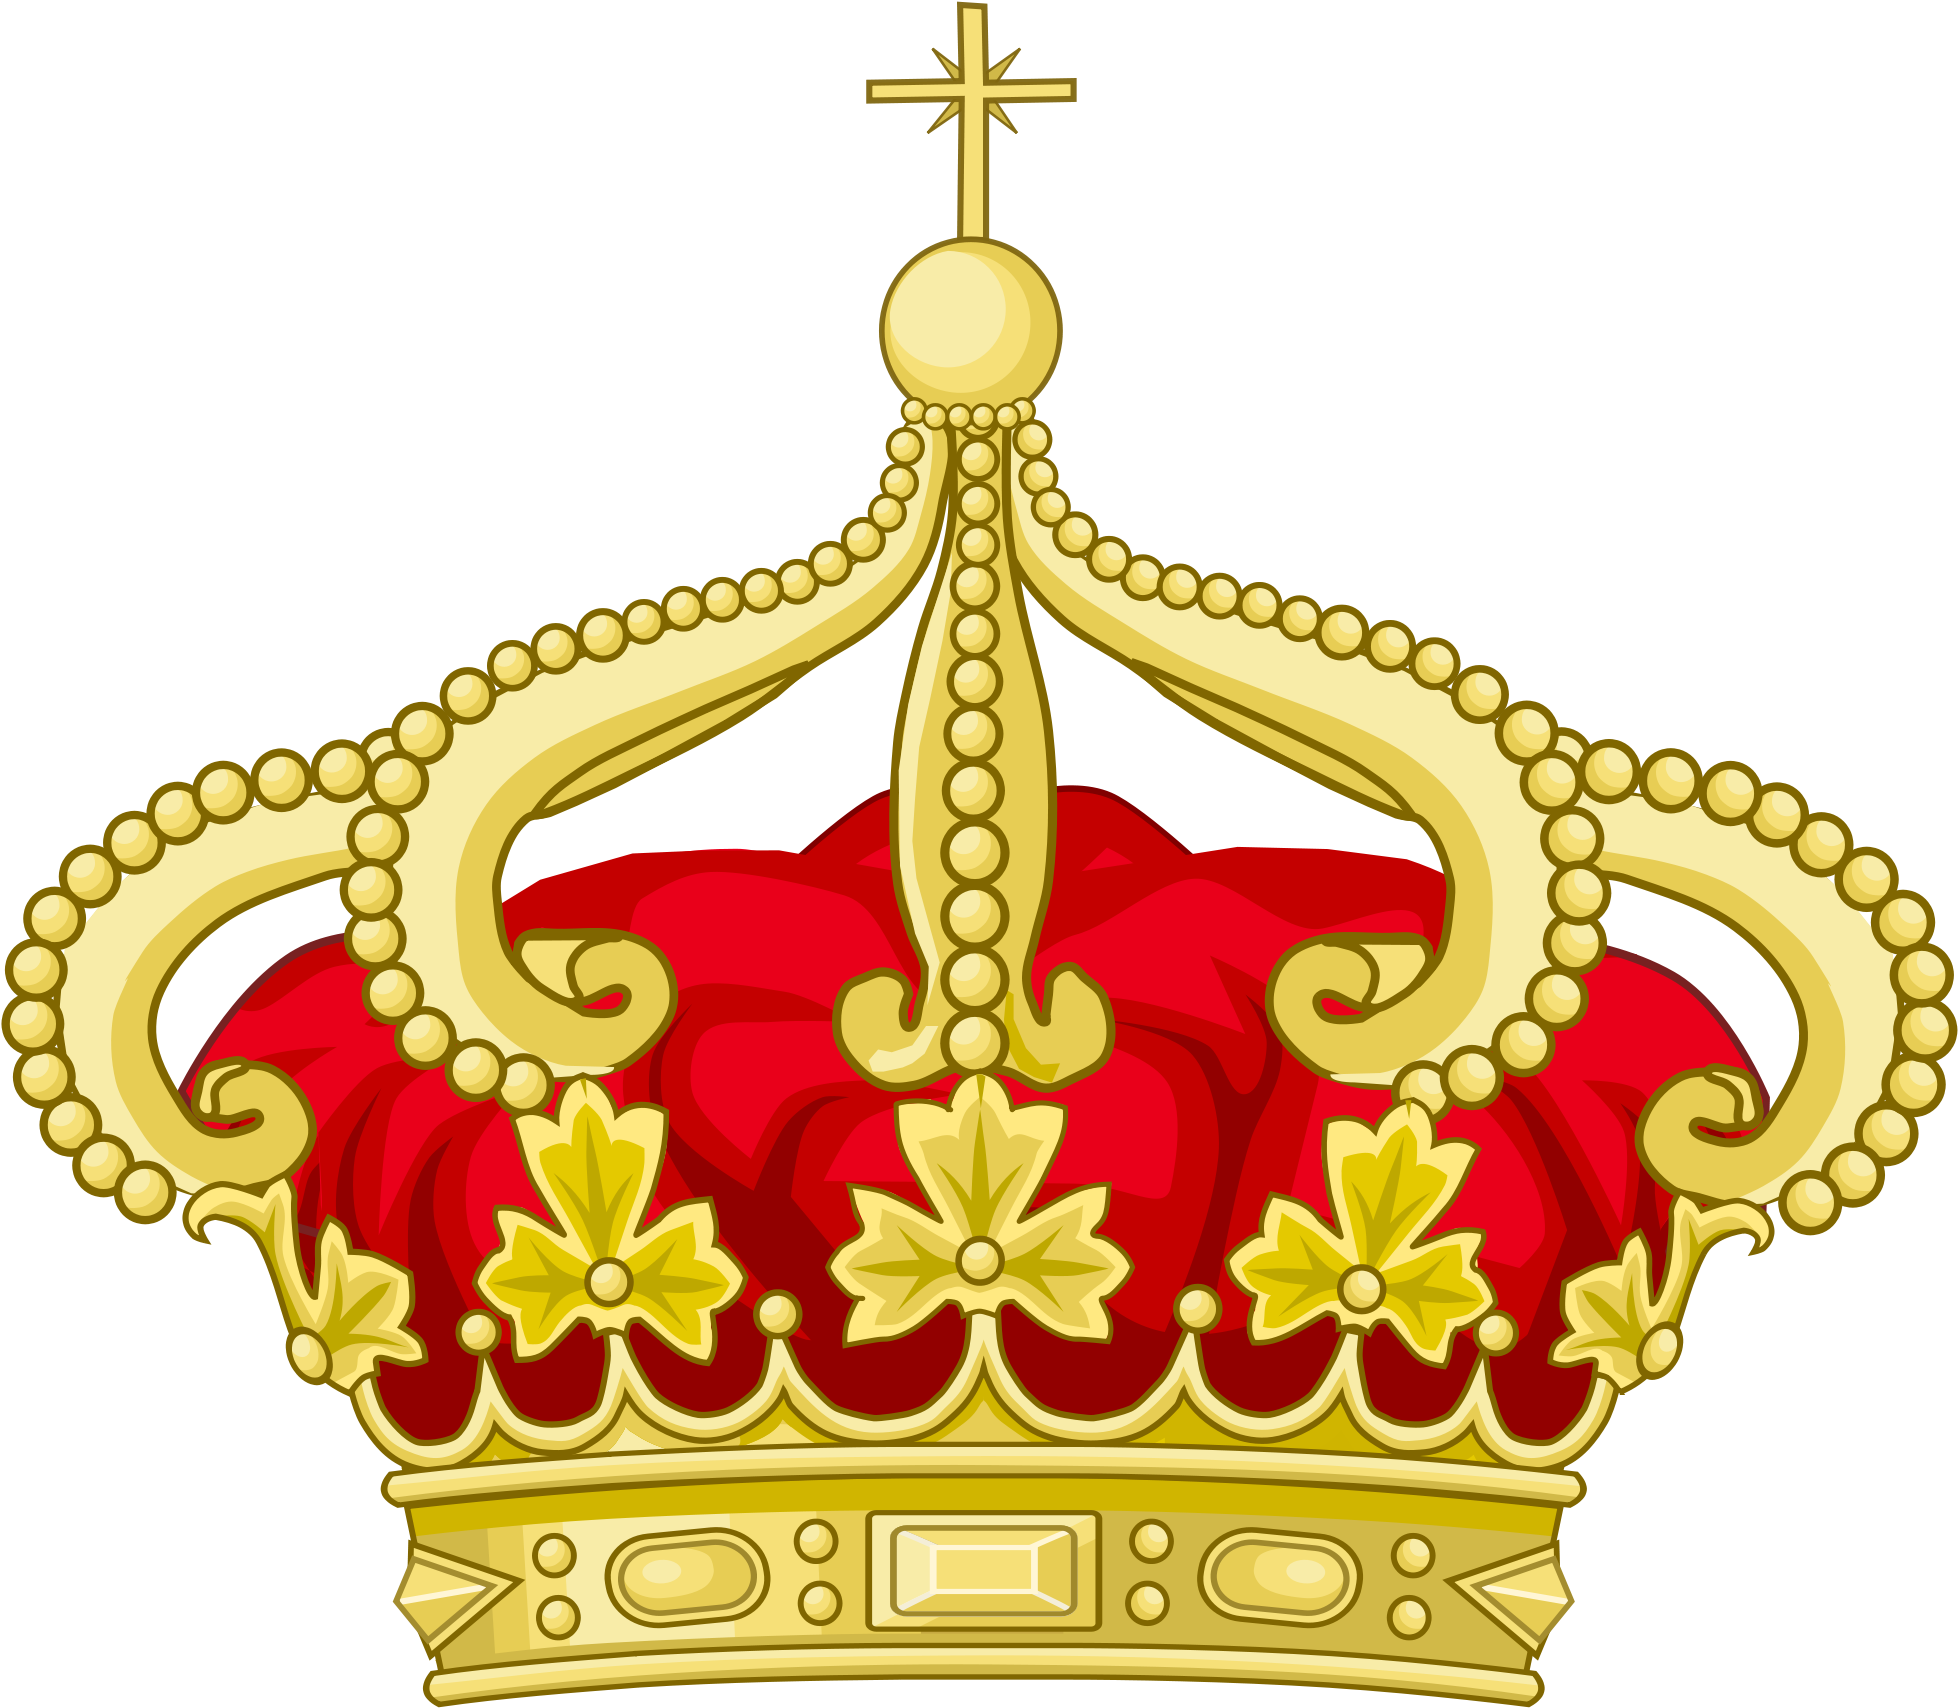 Royal Crown Of Portugal - Portugal Heraldic Crown (2000x1741)